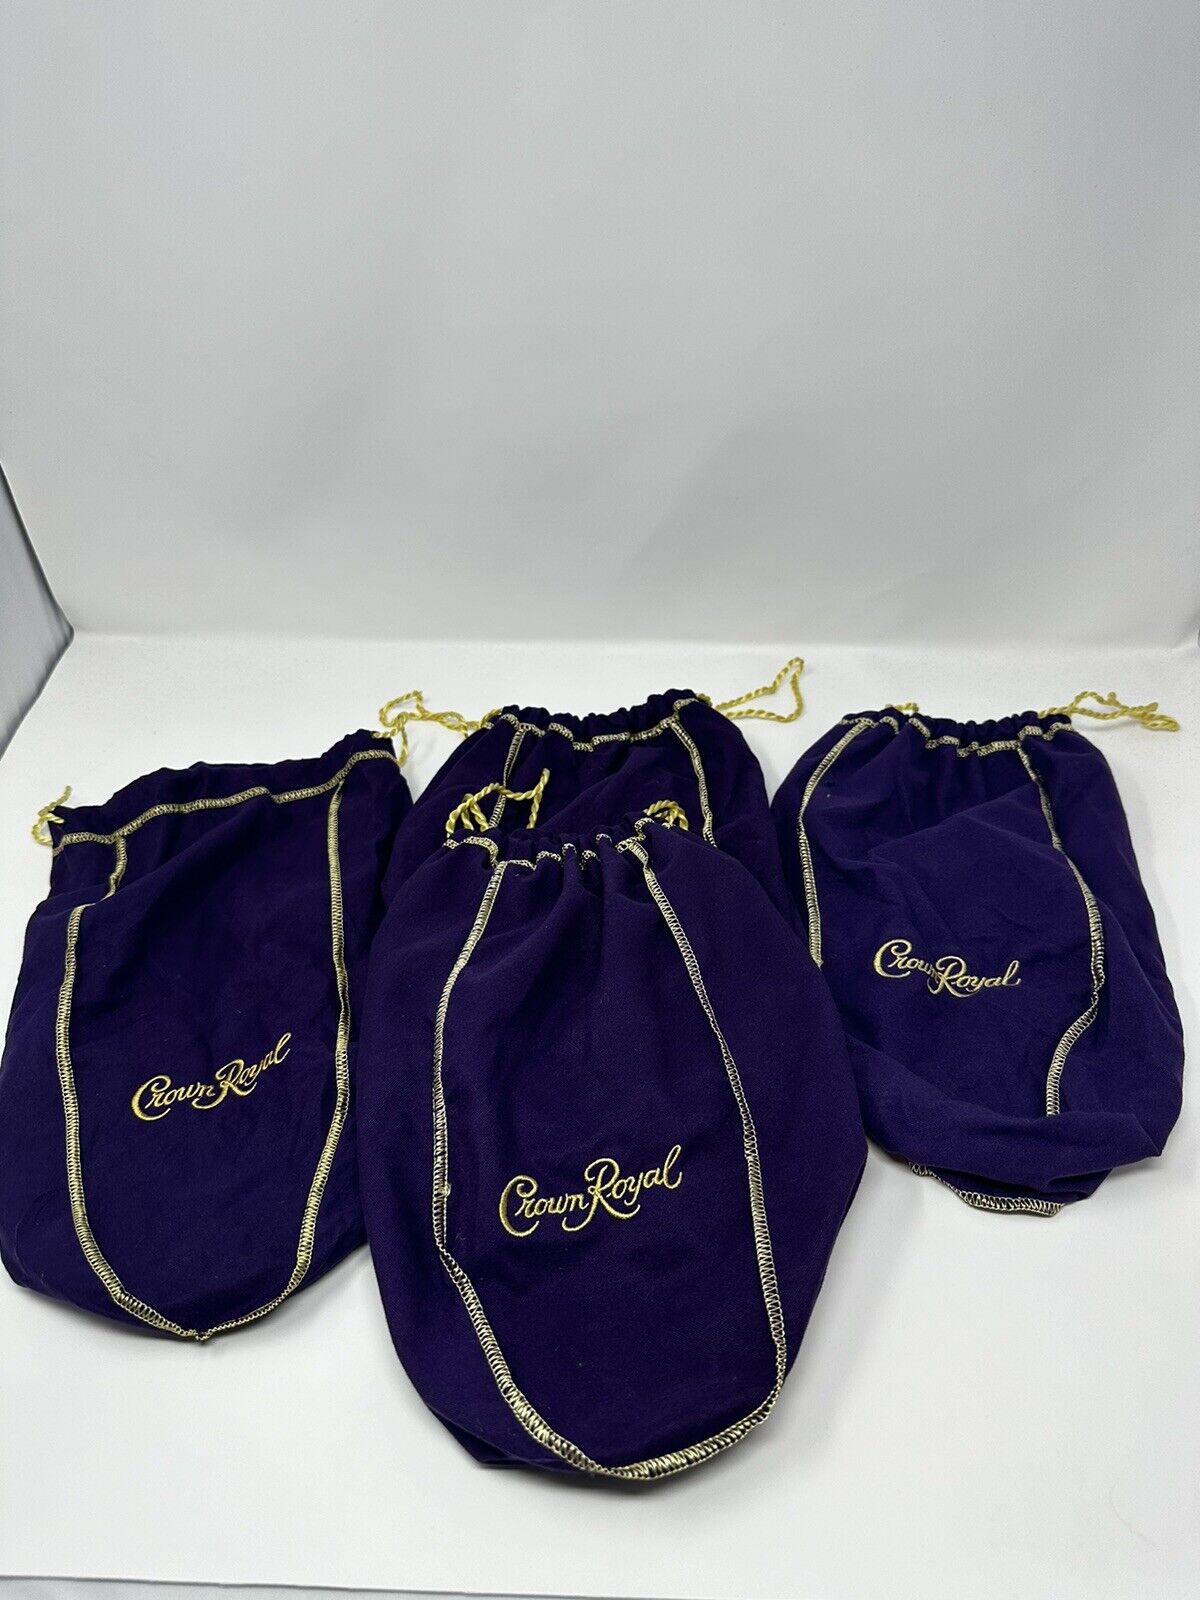 Crown Royal Bags Large Purple Lot Of 4